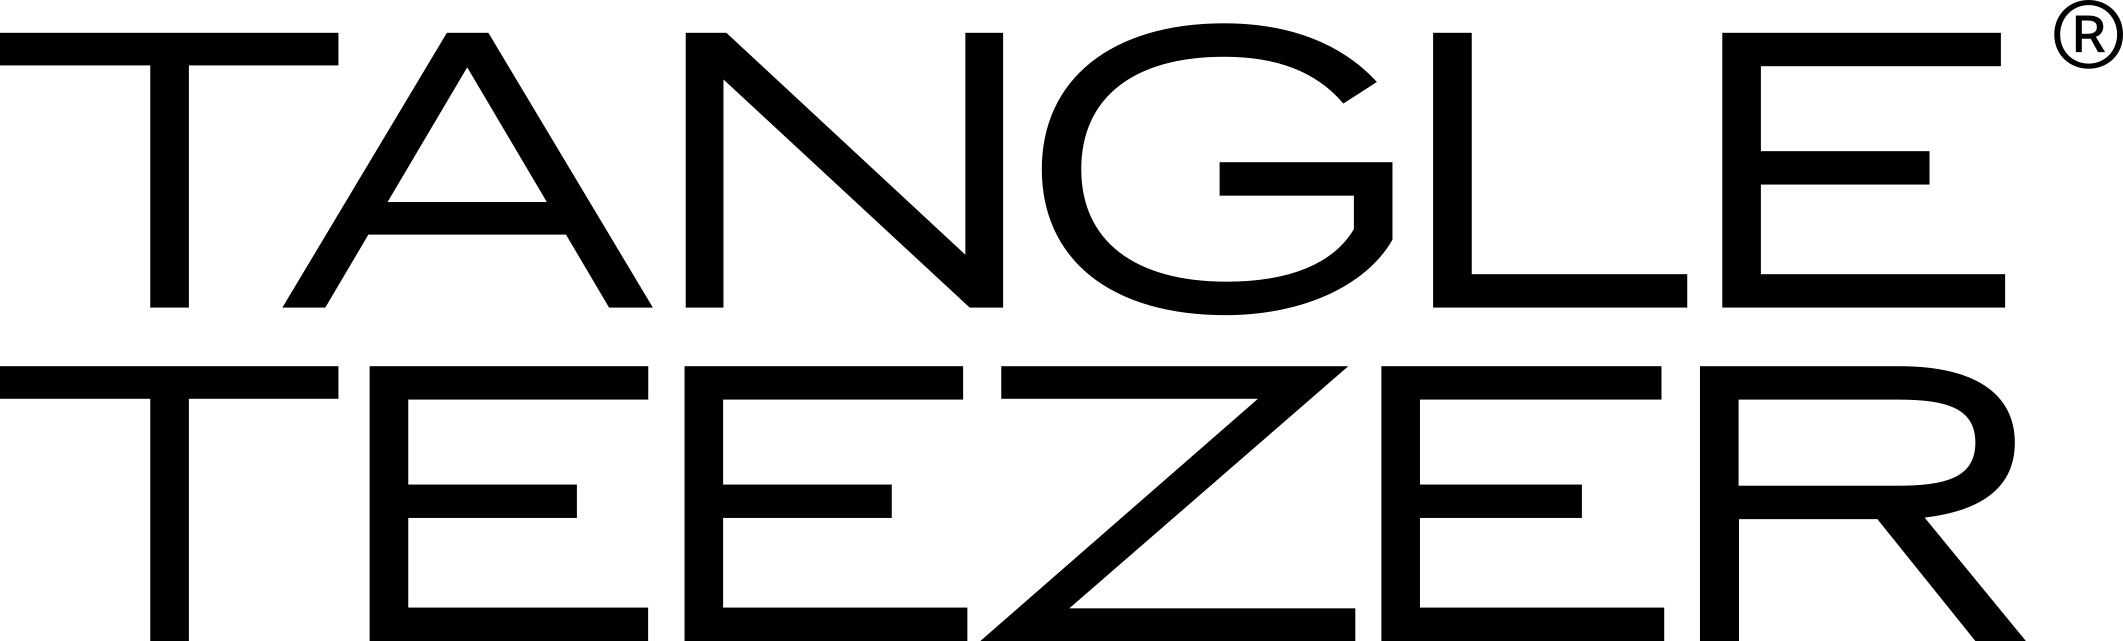 Косметика бренда TANGLE TEEZER, логотип